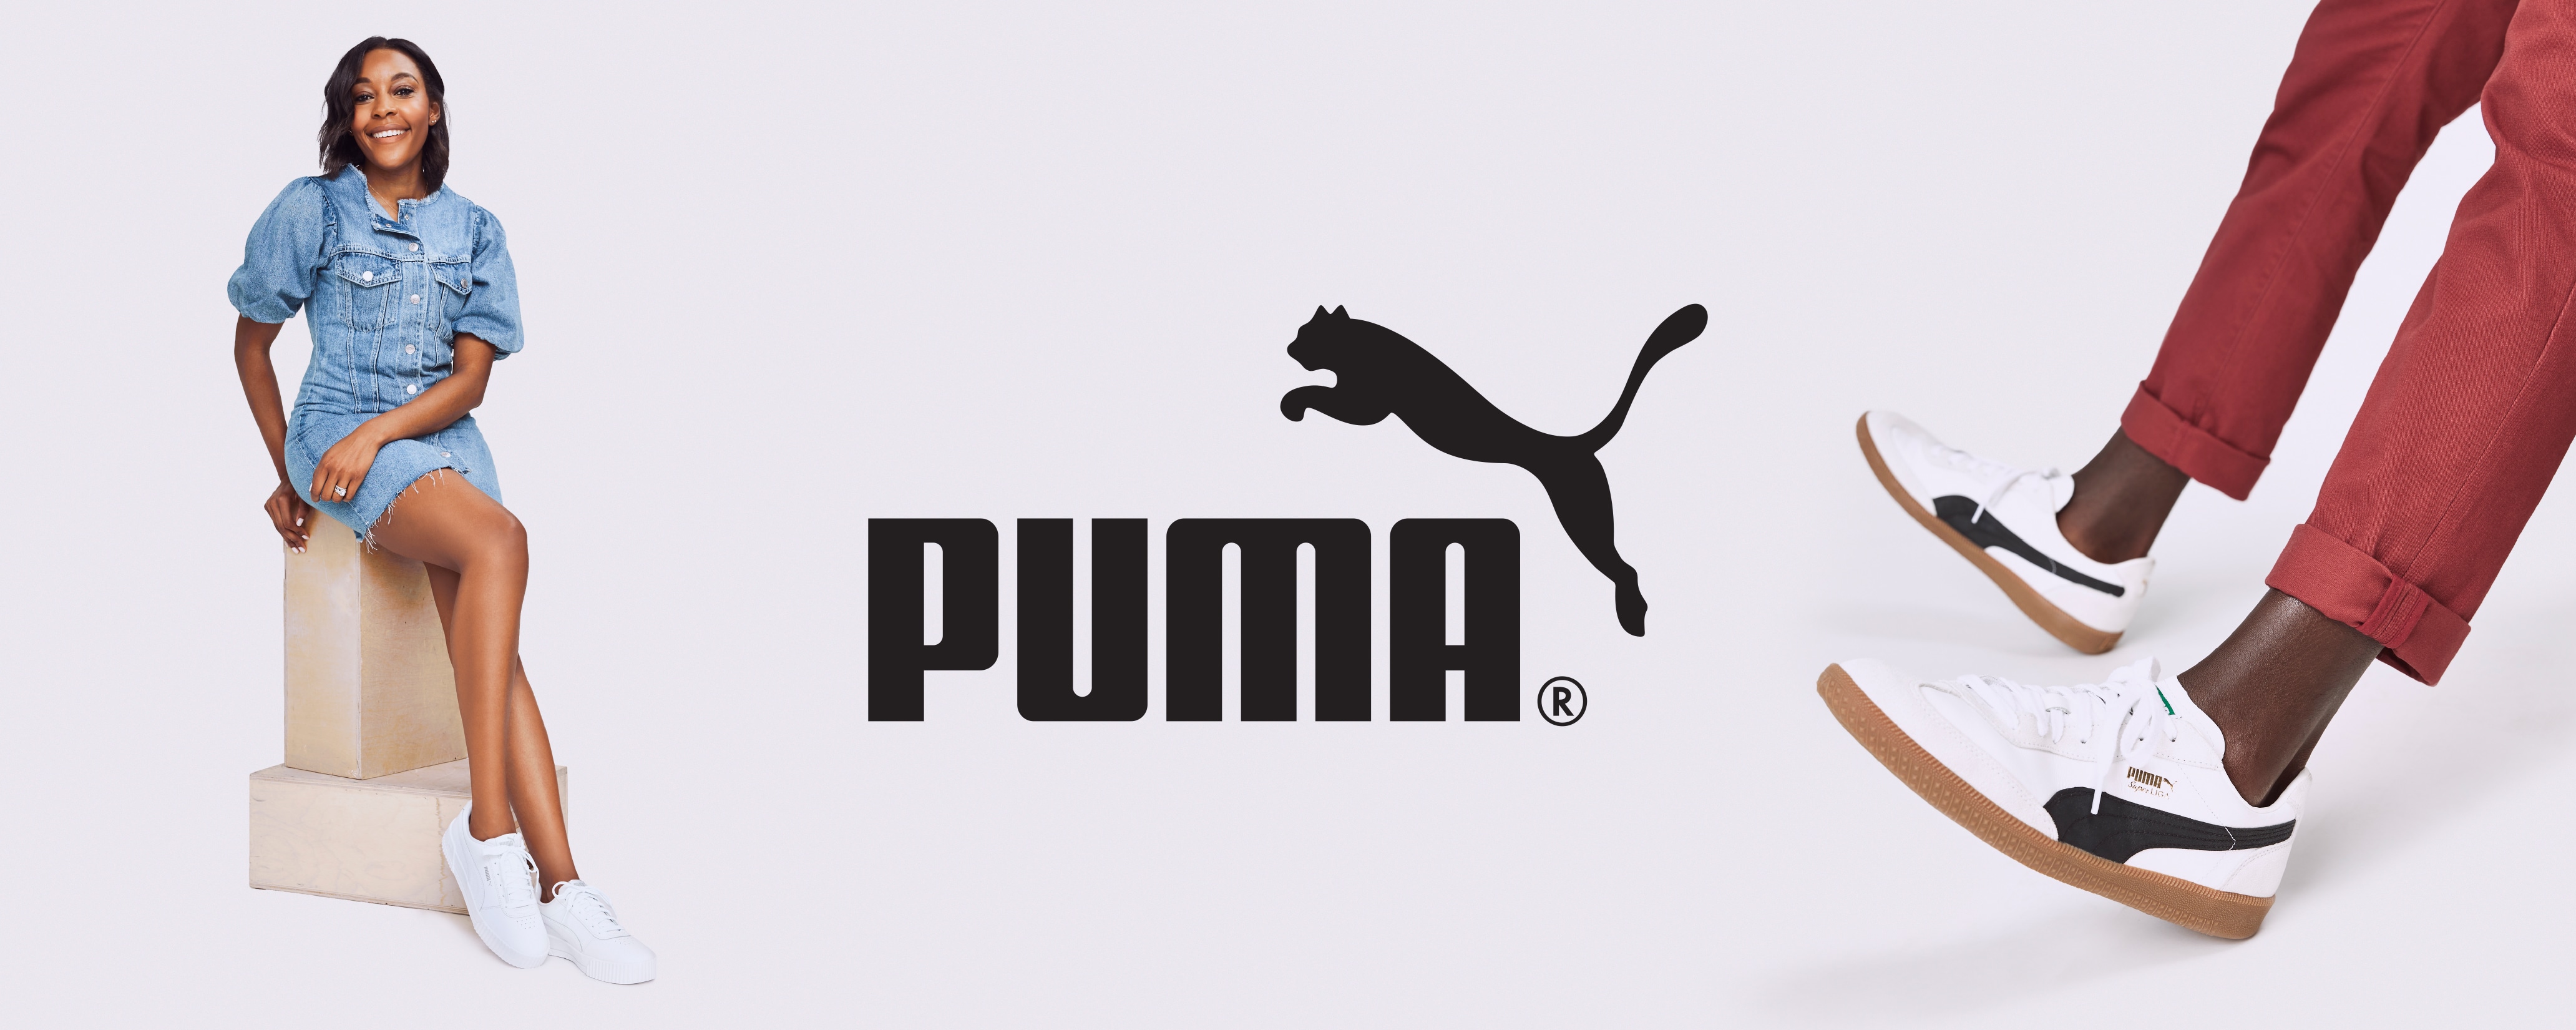 puma brand name